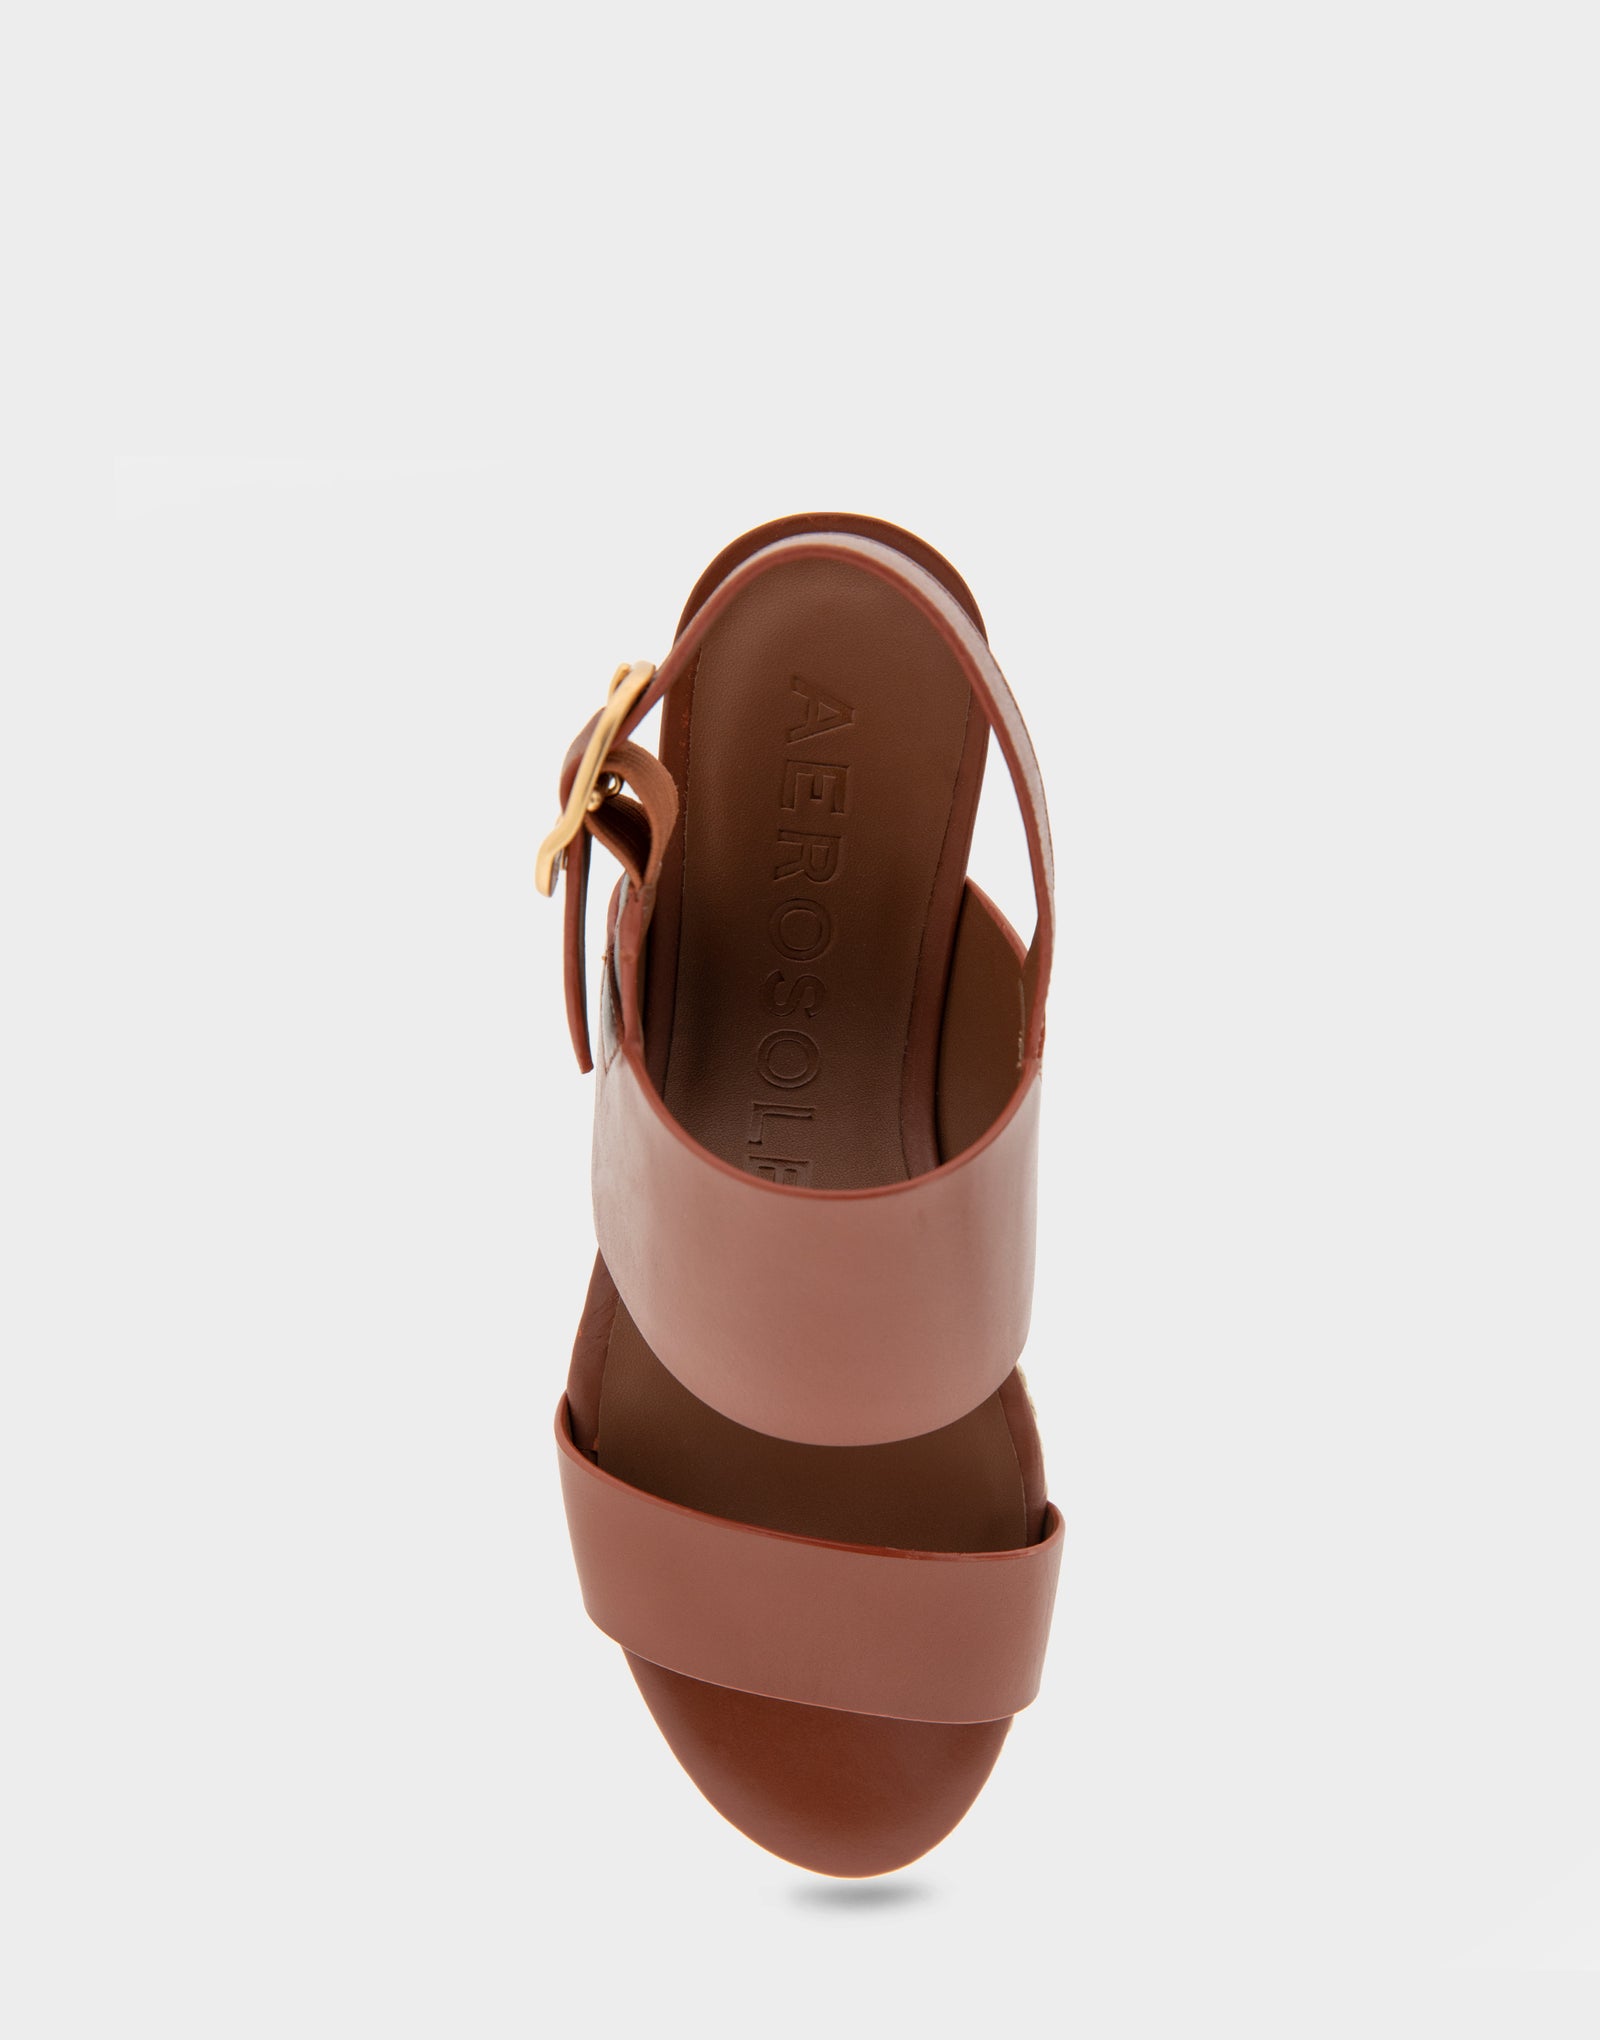 Women's Platform Sandal in Gingerbread Leather